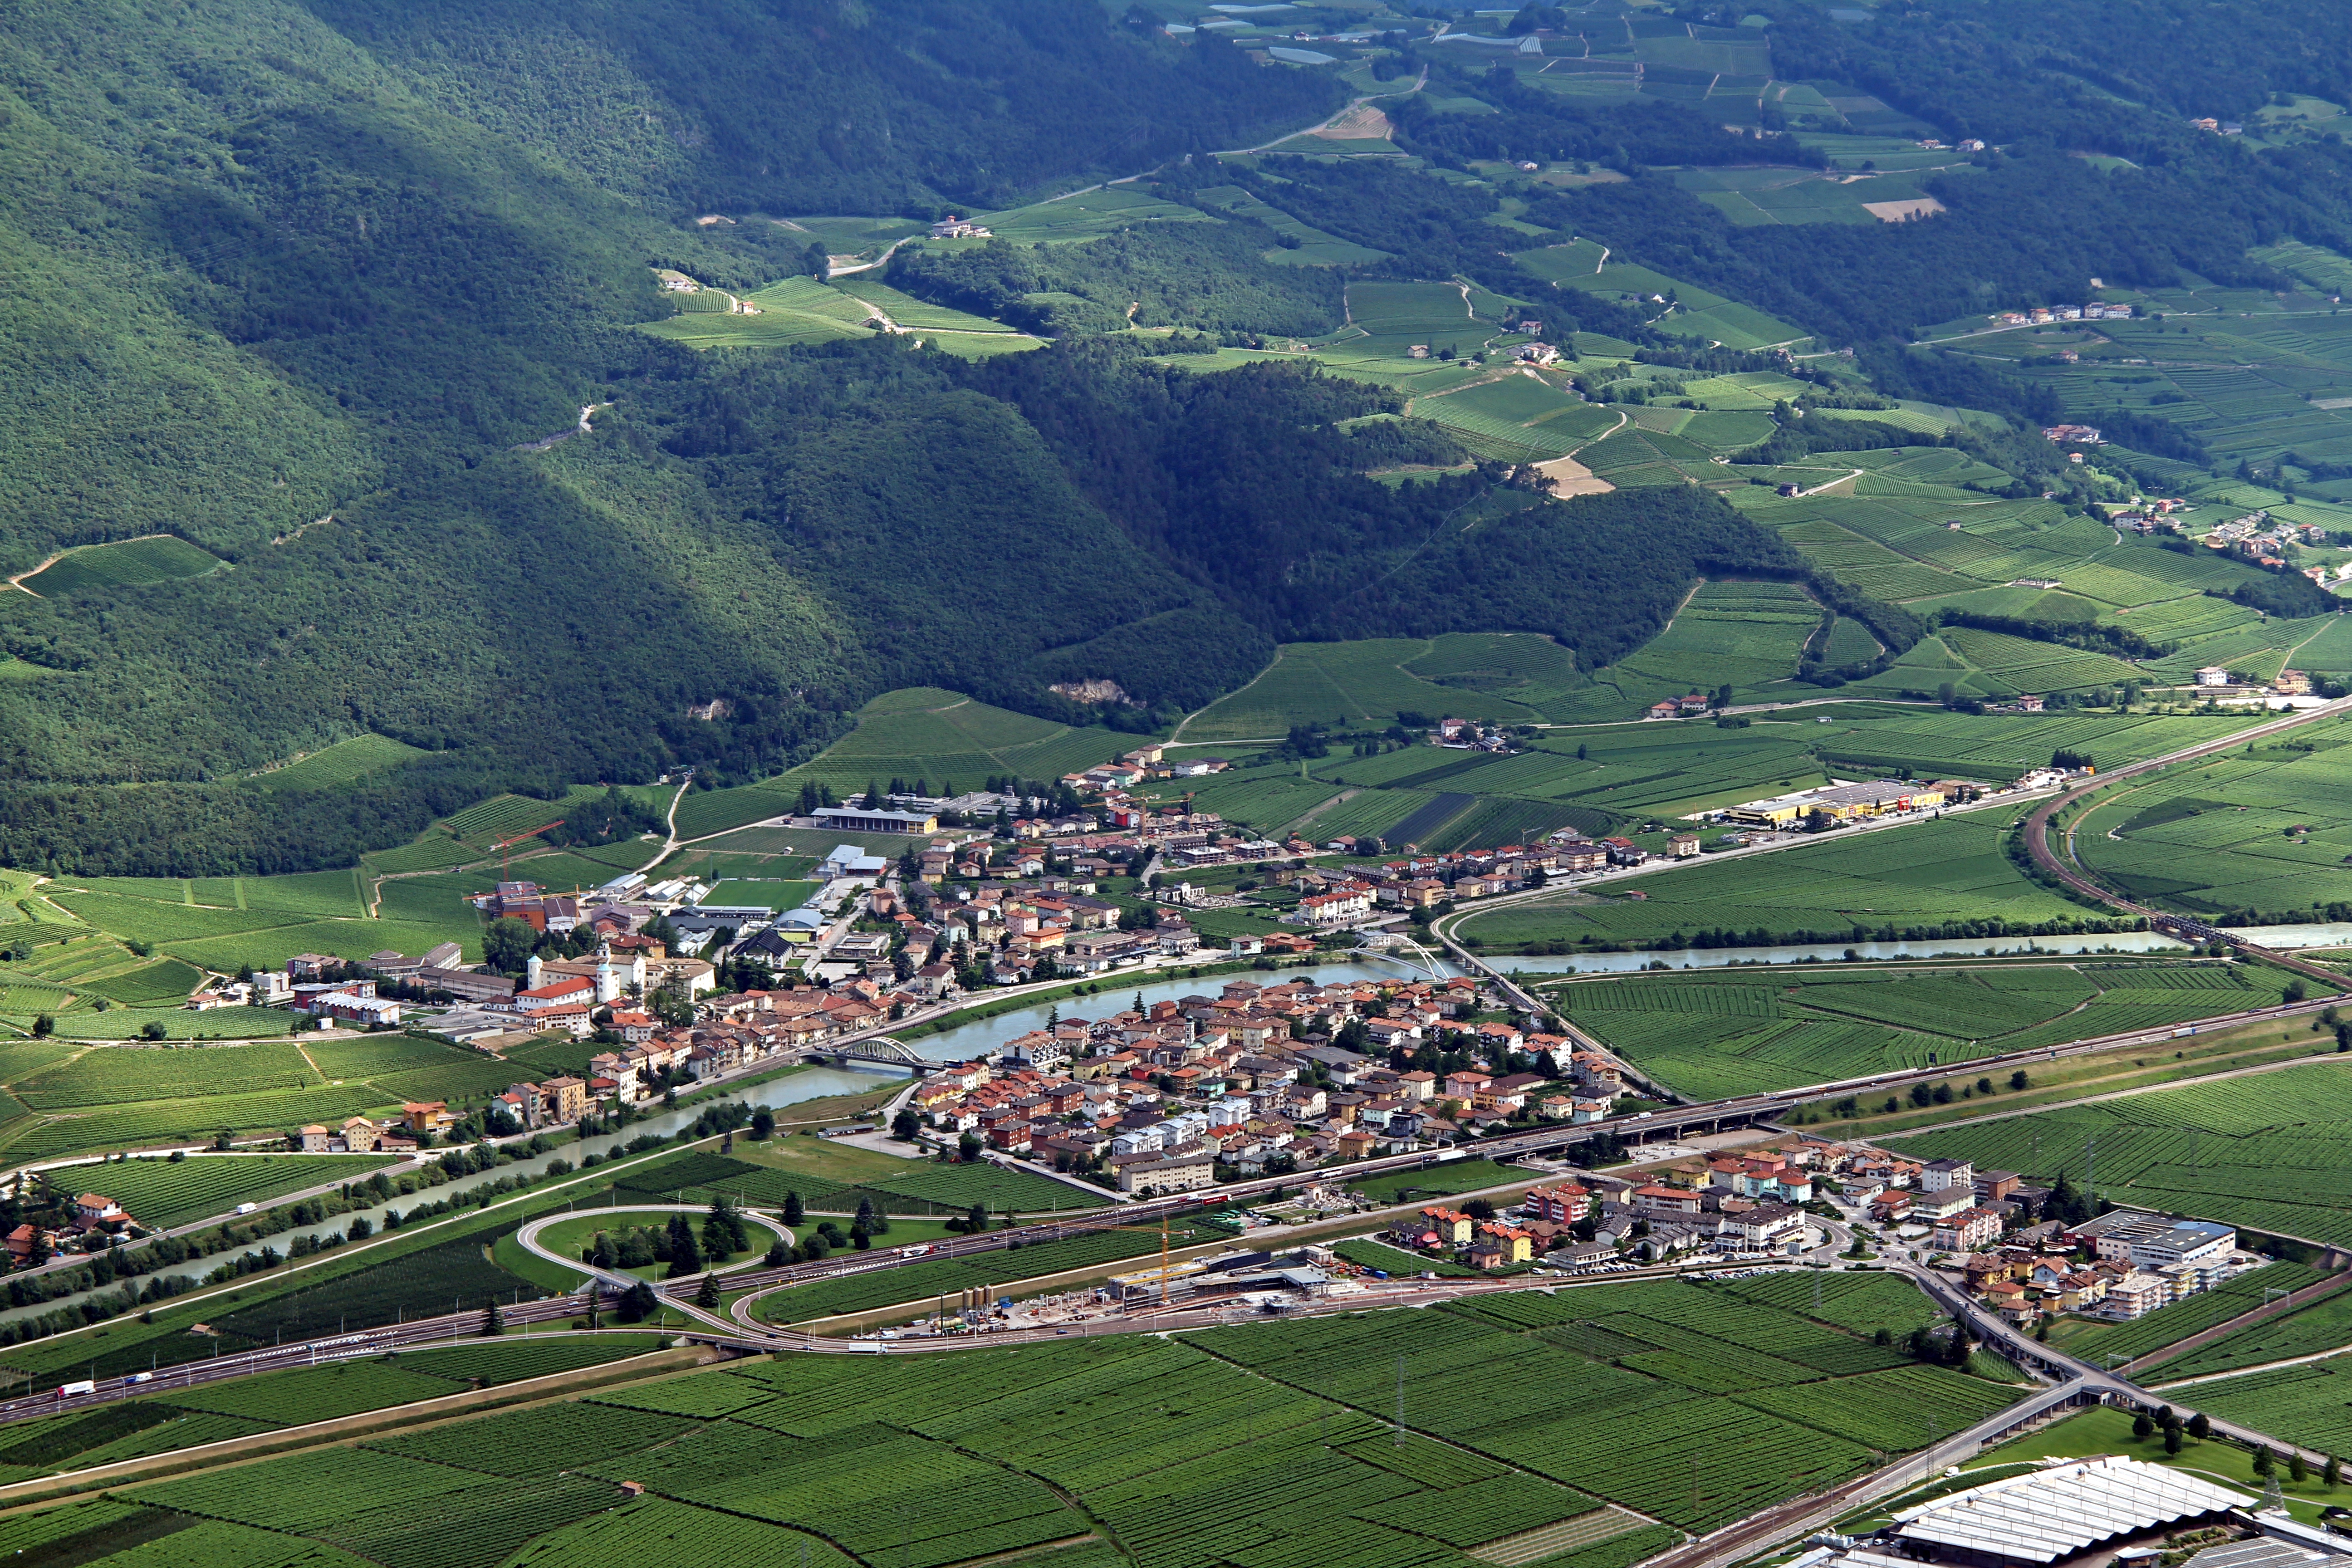 Concurso Giro d'Italia PCM Spain 2014  San_Michele_all'Adige-panorama_from_west